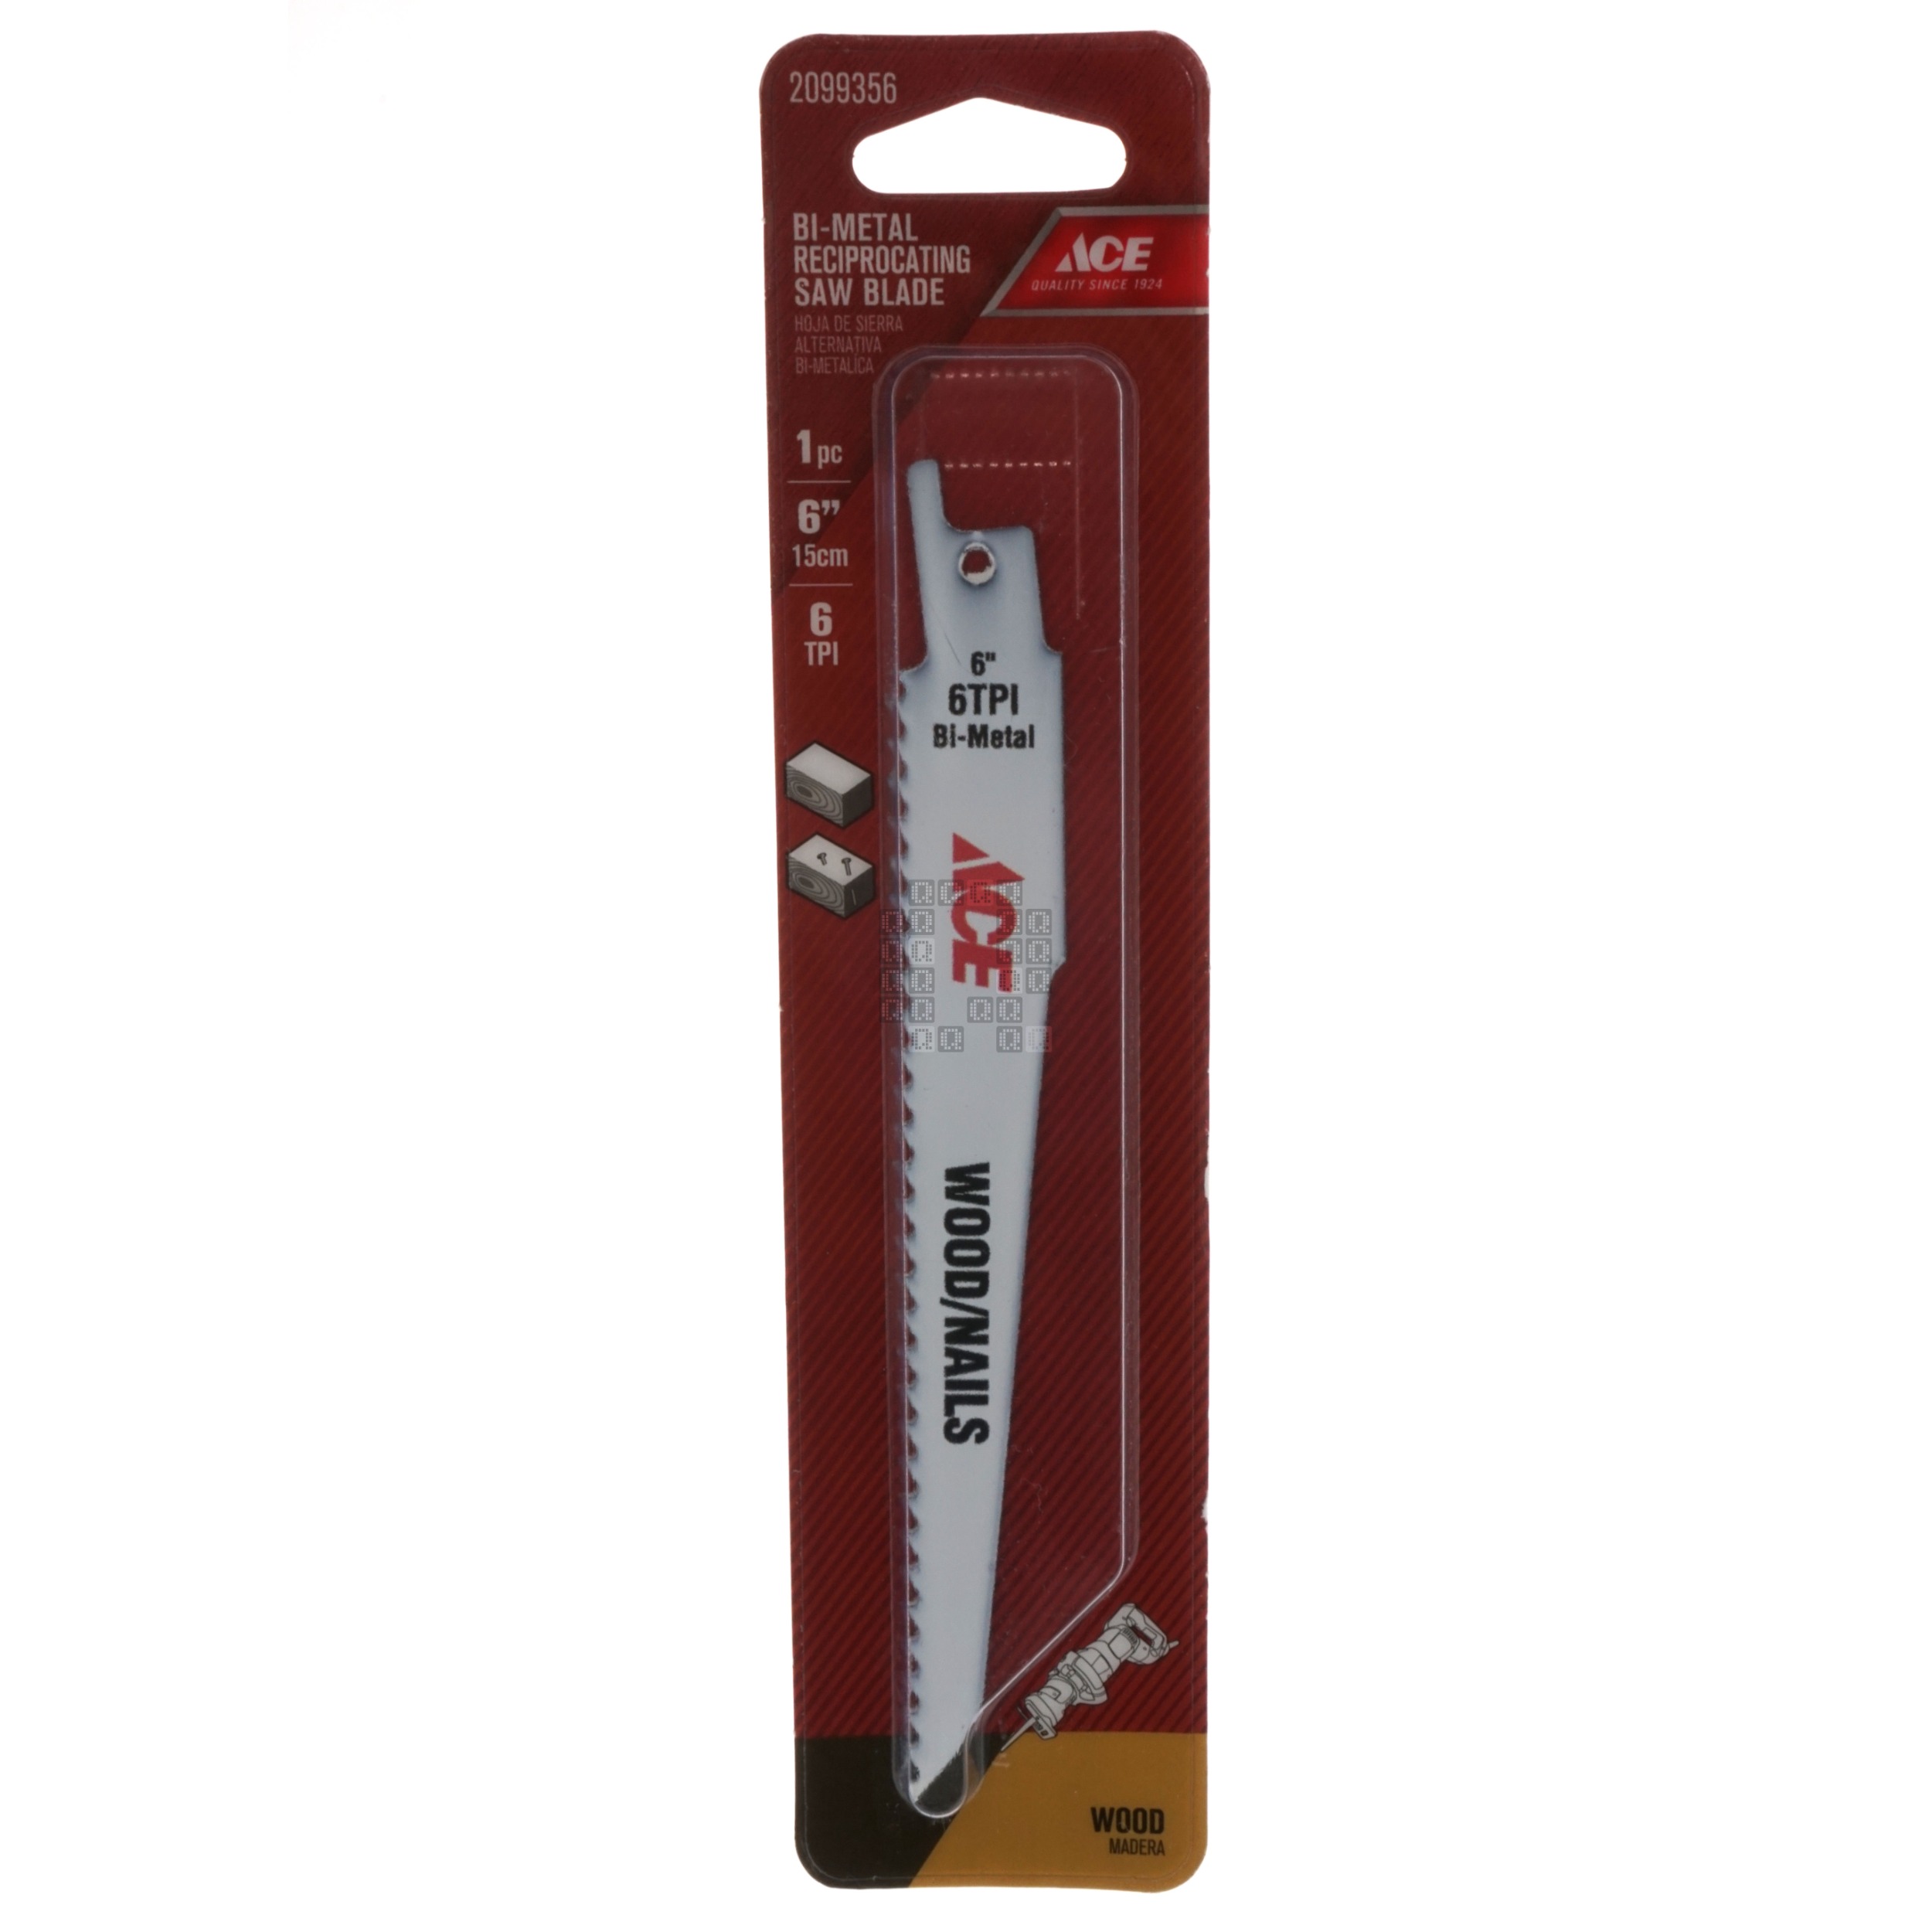 ACE Hardware 2099356 Bi-Metal 6" Rough Cut Wood/Nails Reciprocating Saw Blade